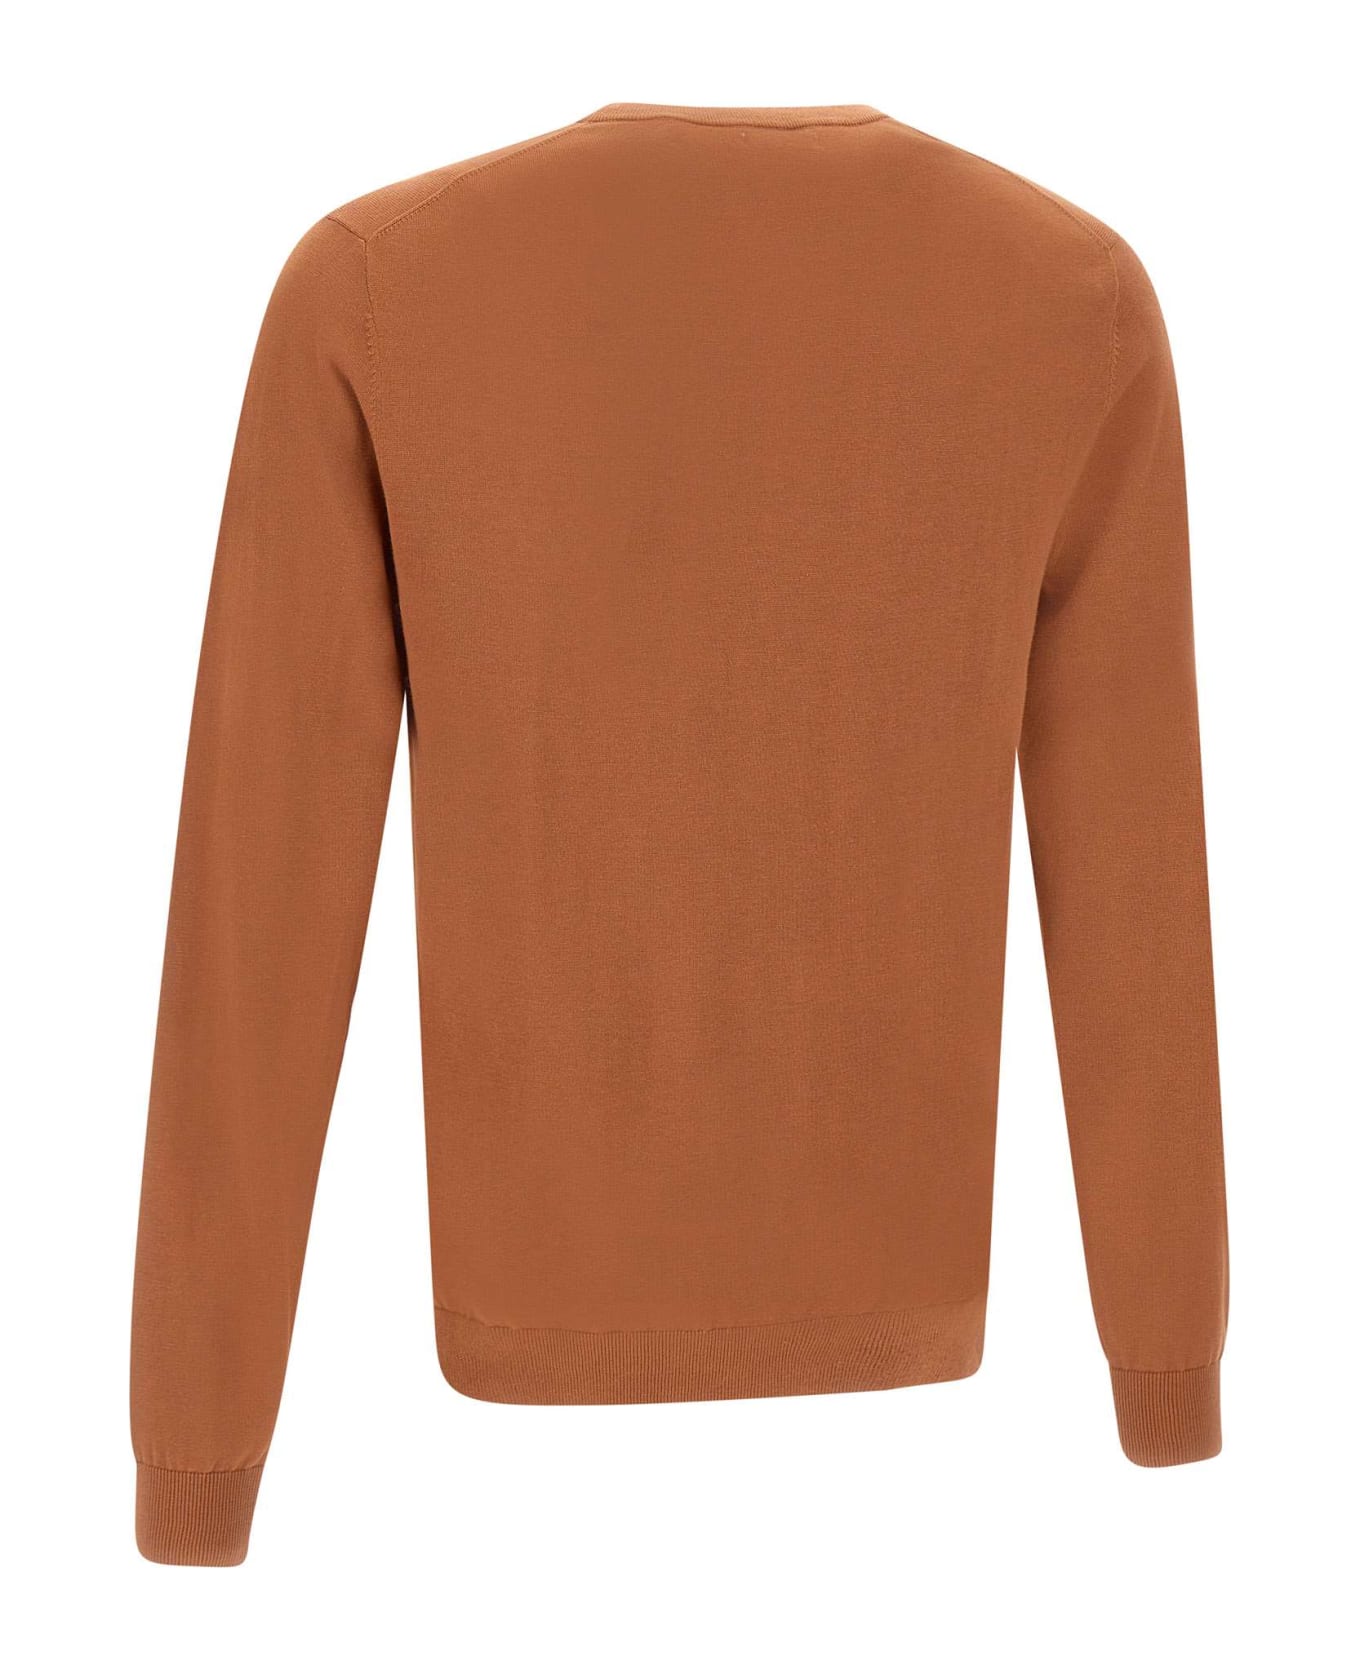 Sun 68 "solid" Cotton Sweater - BROWN ニットウェア